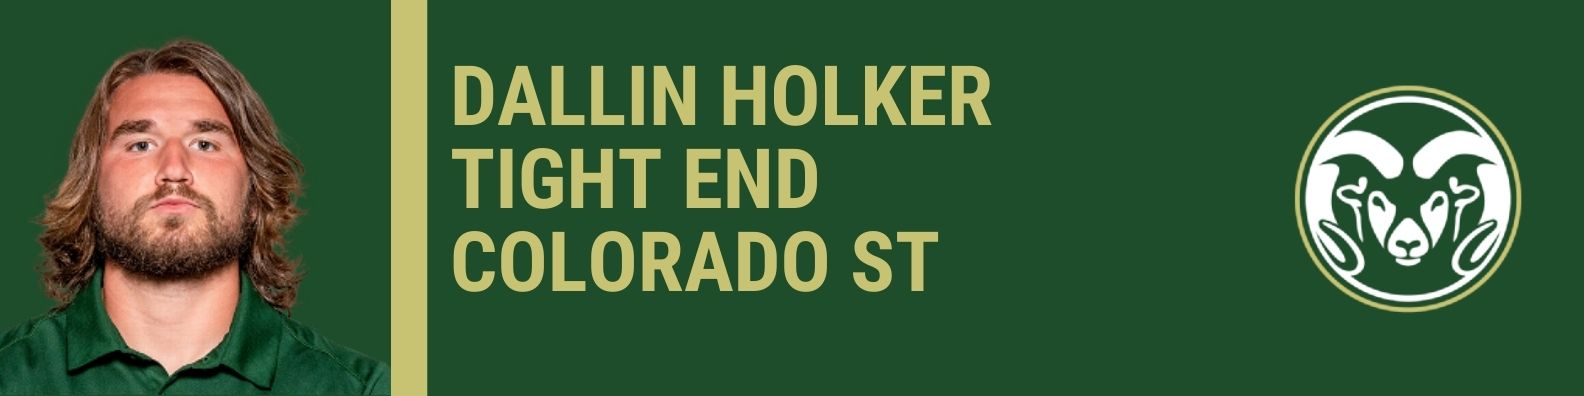 Dallin Holker, Colorado St